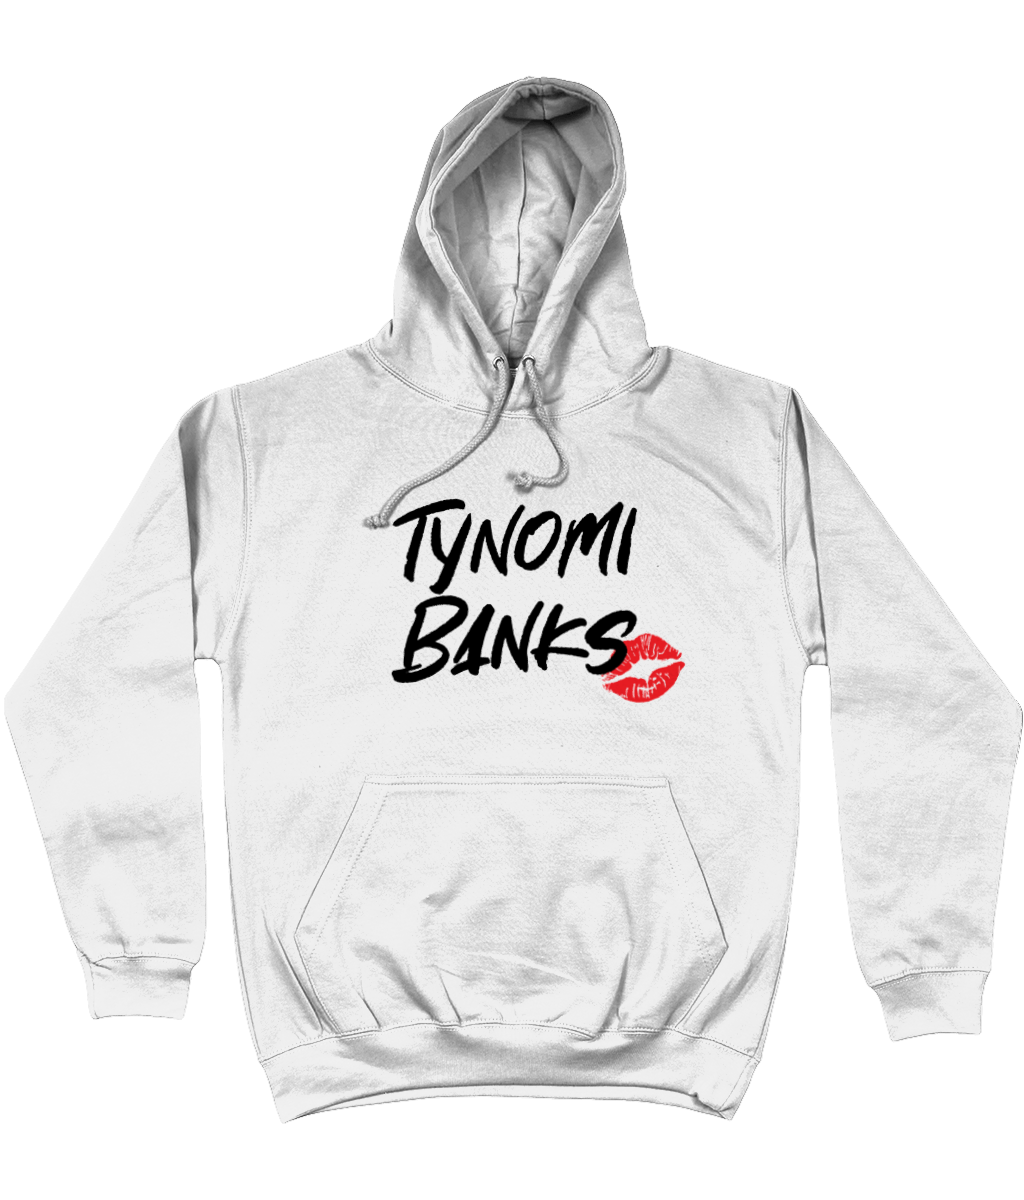 Tynomi Banks - Logo Hoodie - SNATCHED MERCH